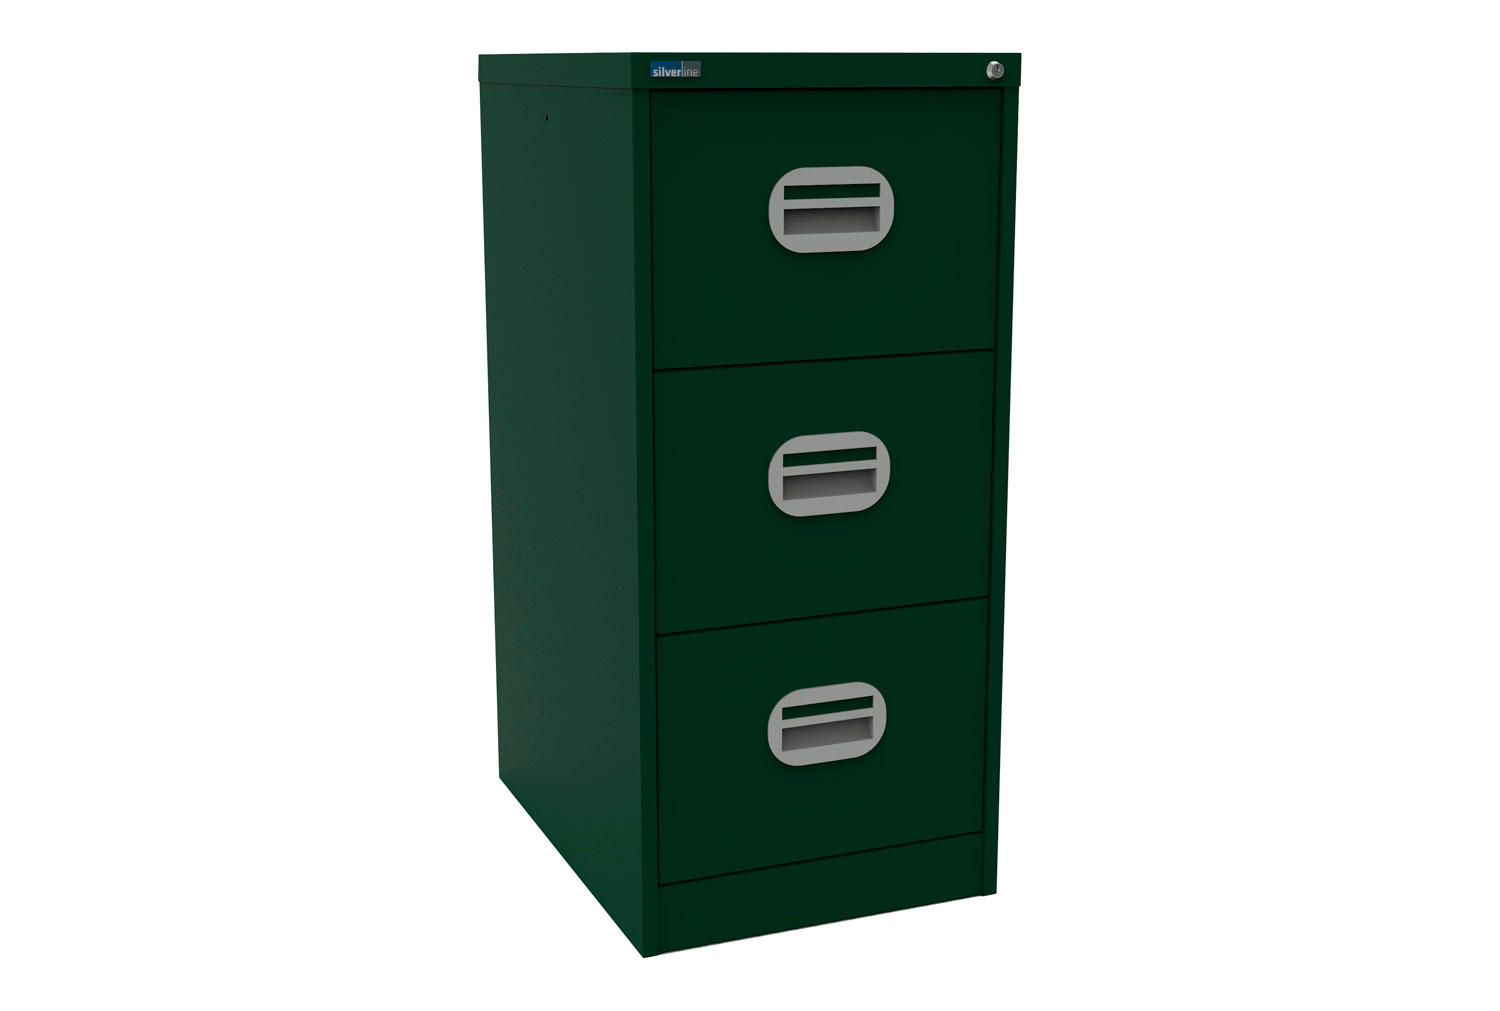 Silverline Kontrax 3 Drawer Filing Cabinet, 3 Drawer - 46wx62dx101h (cm), Green